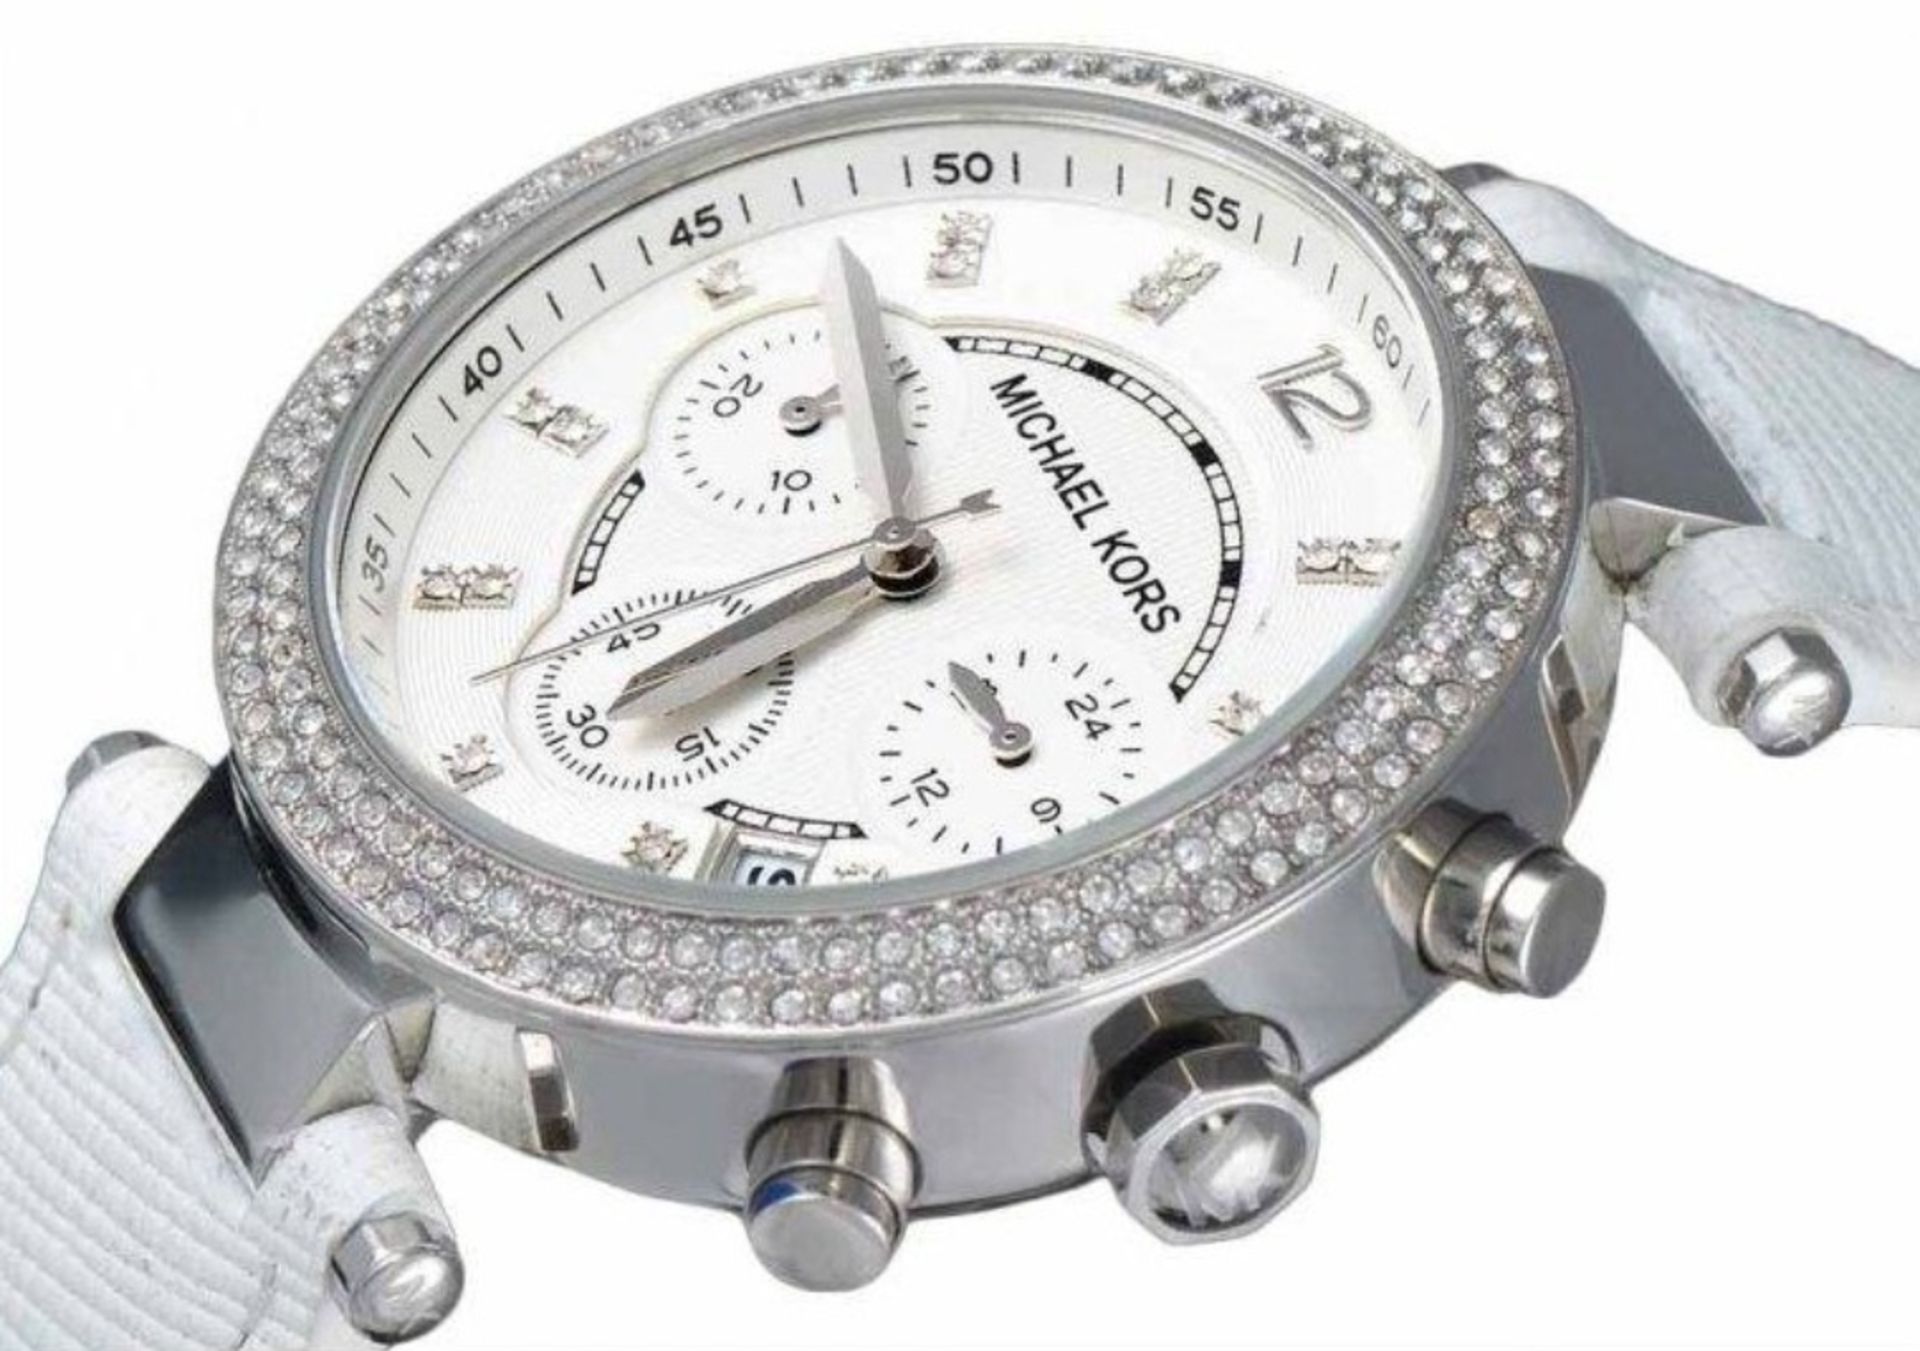 Michael Kors MK2277 Ladies Parker White Leather Strap quartz Chronograph Designer Watch - Image 4 of 8